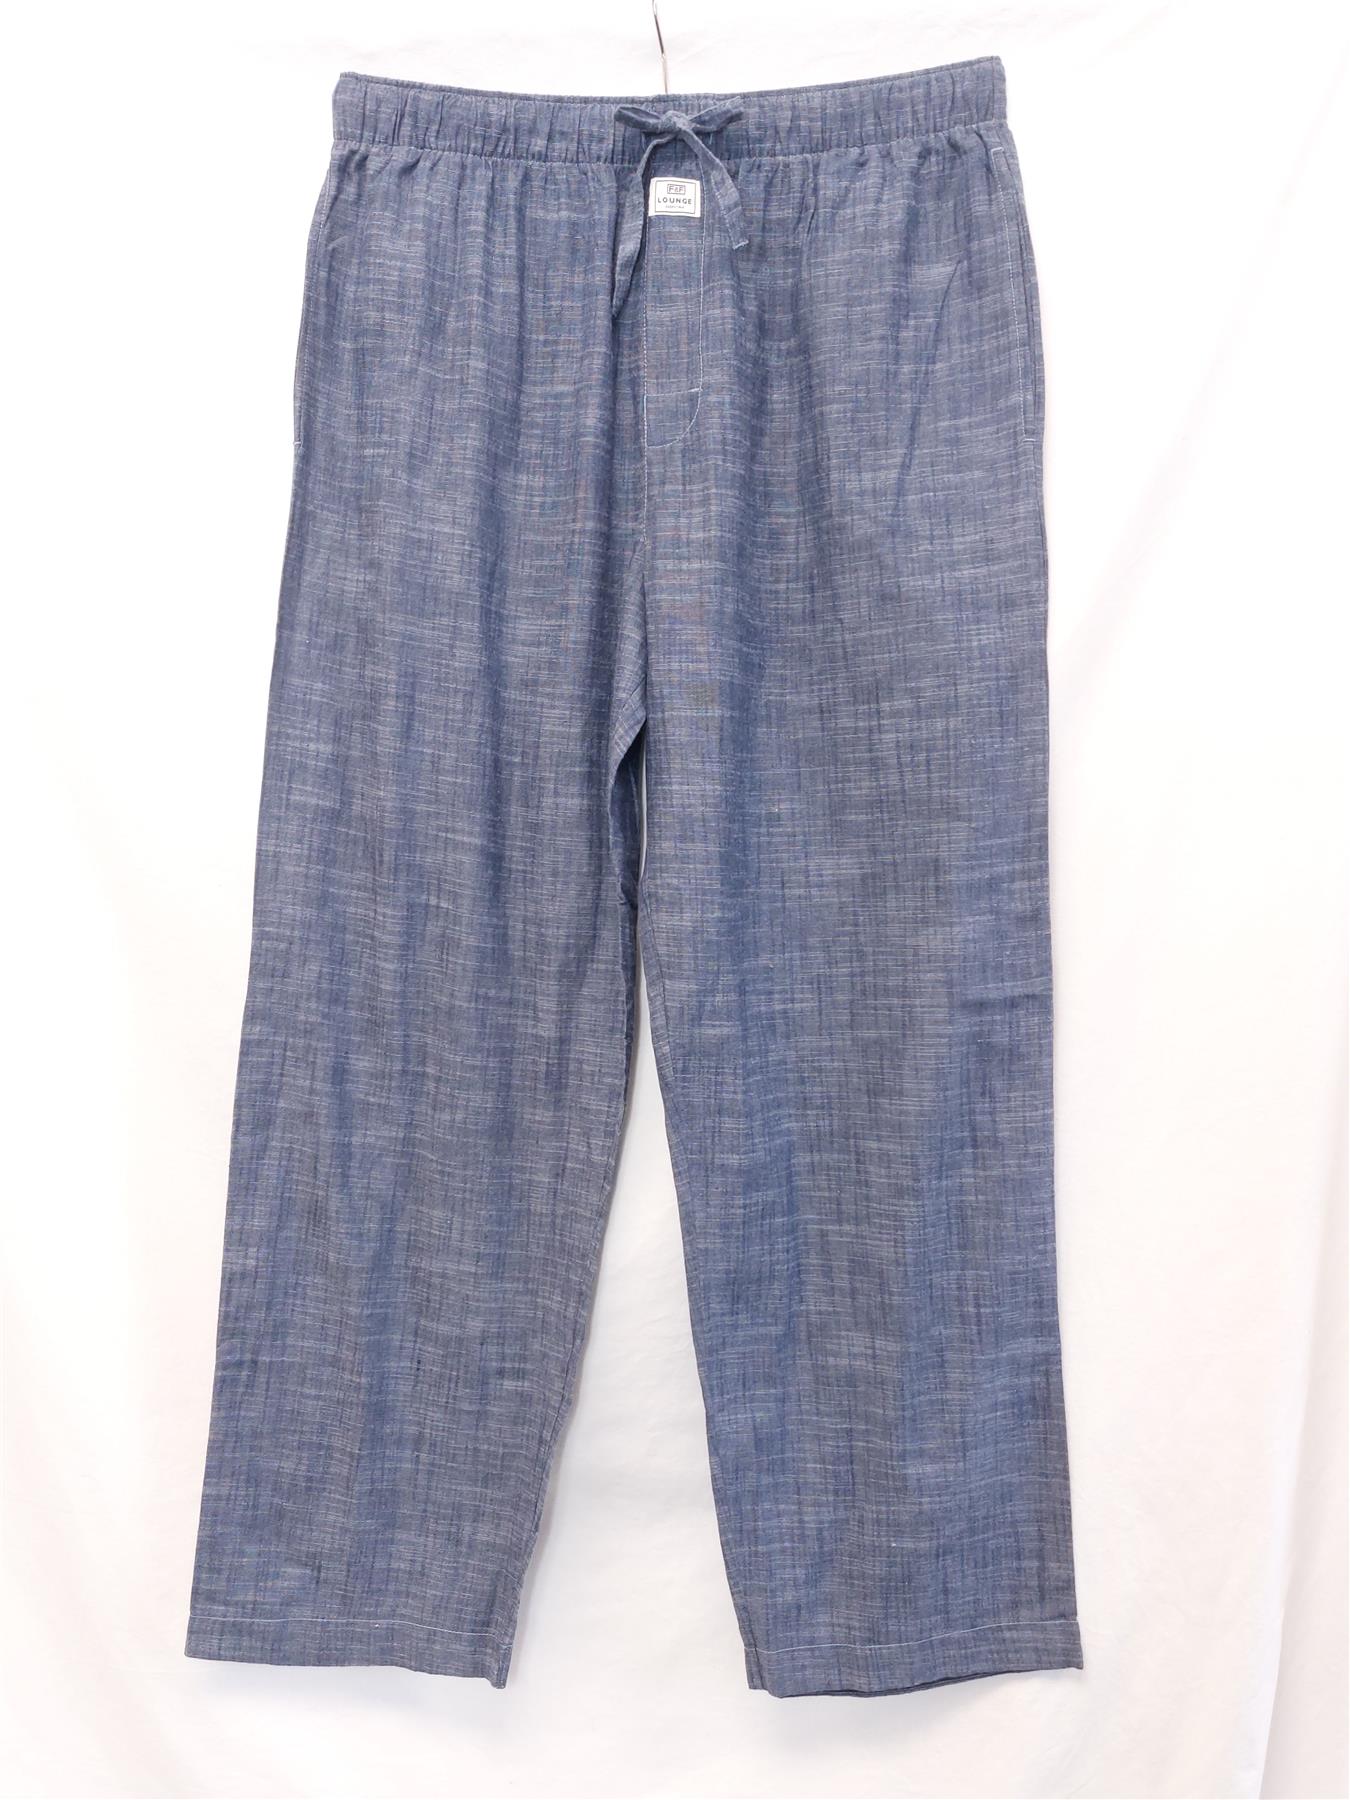 Men's Cotton Pyjama Bottoms F&F Lounge Essentials Comfy PJ Pants Blue Denim-Look